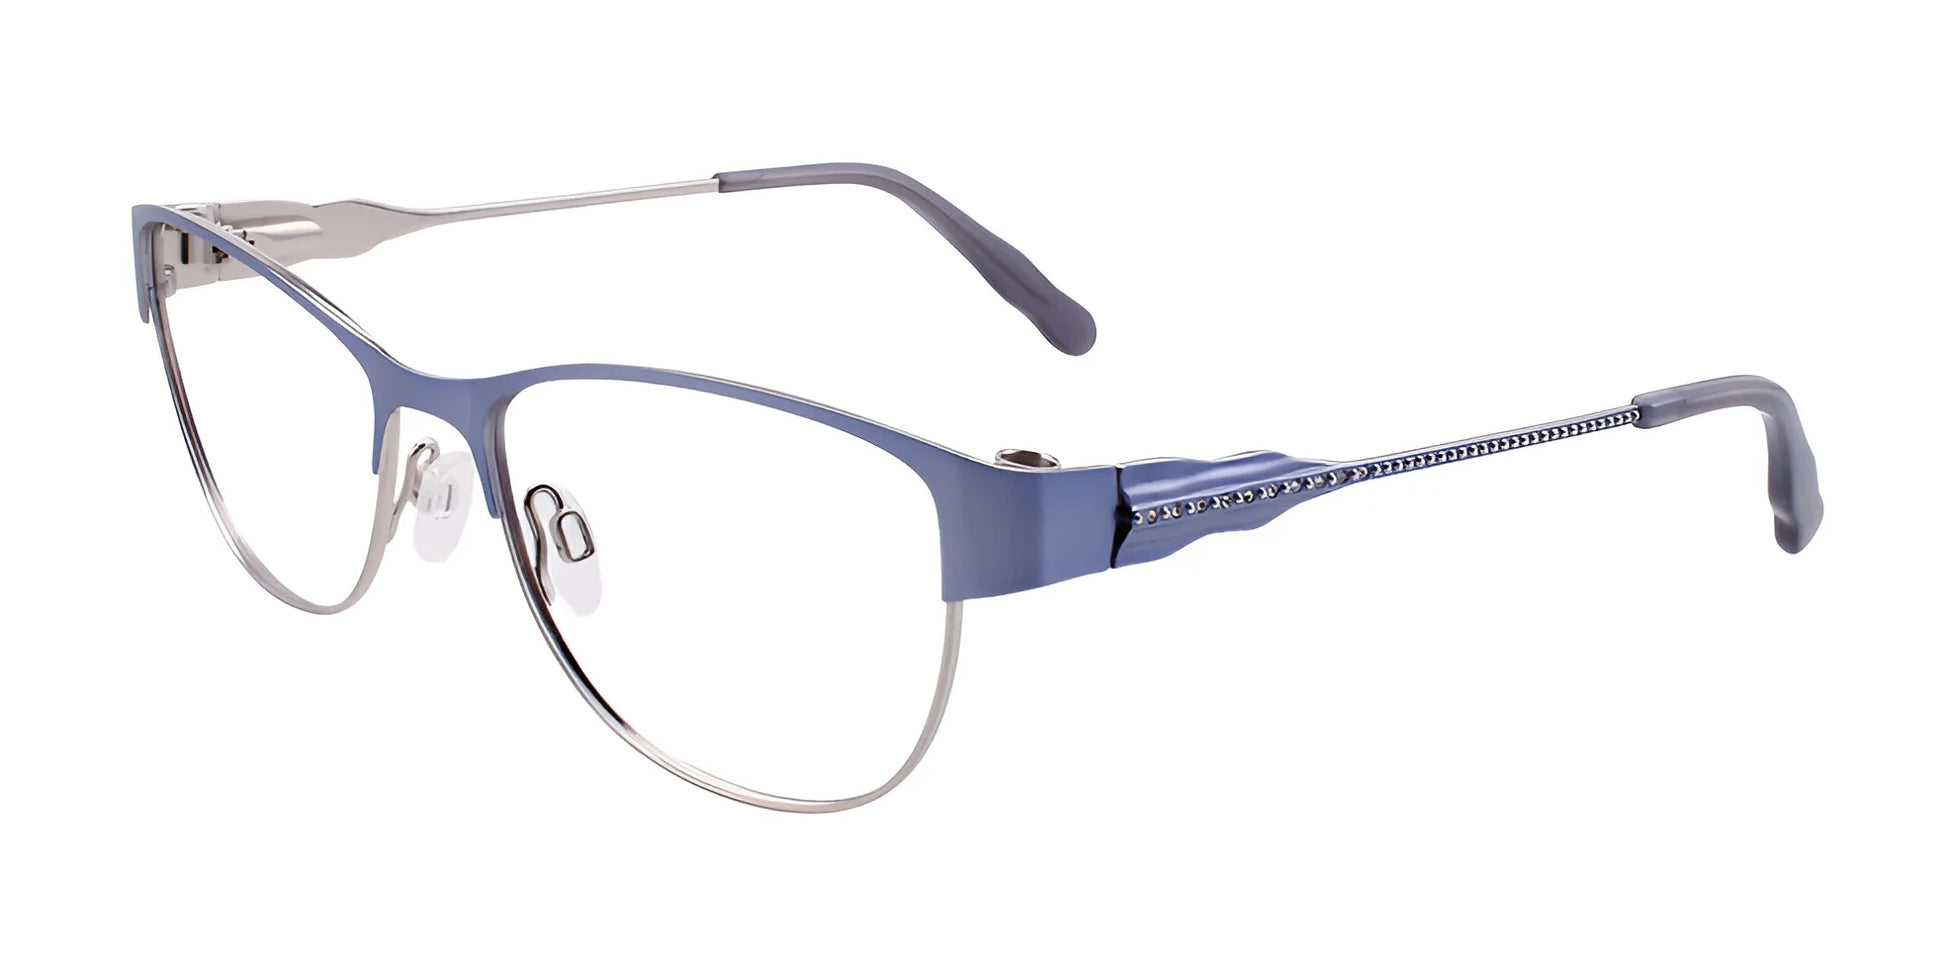 EasyClip EC405 Eyeglasses Satin Light Blue & Shiny Silver / Kit With Both Clips